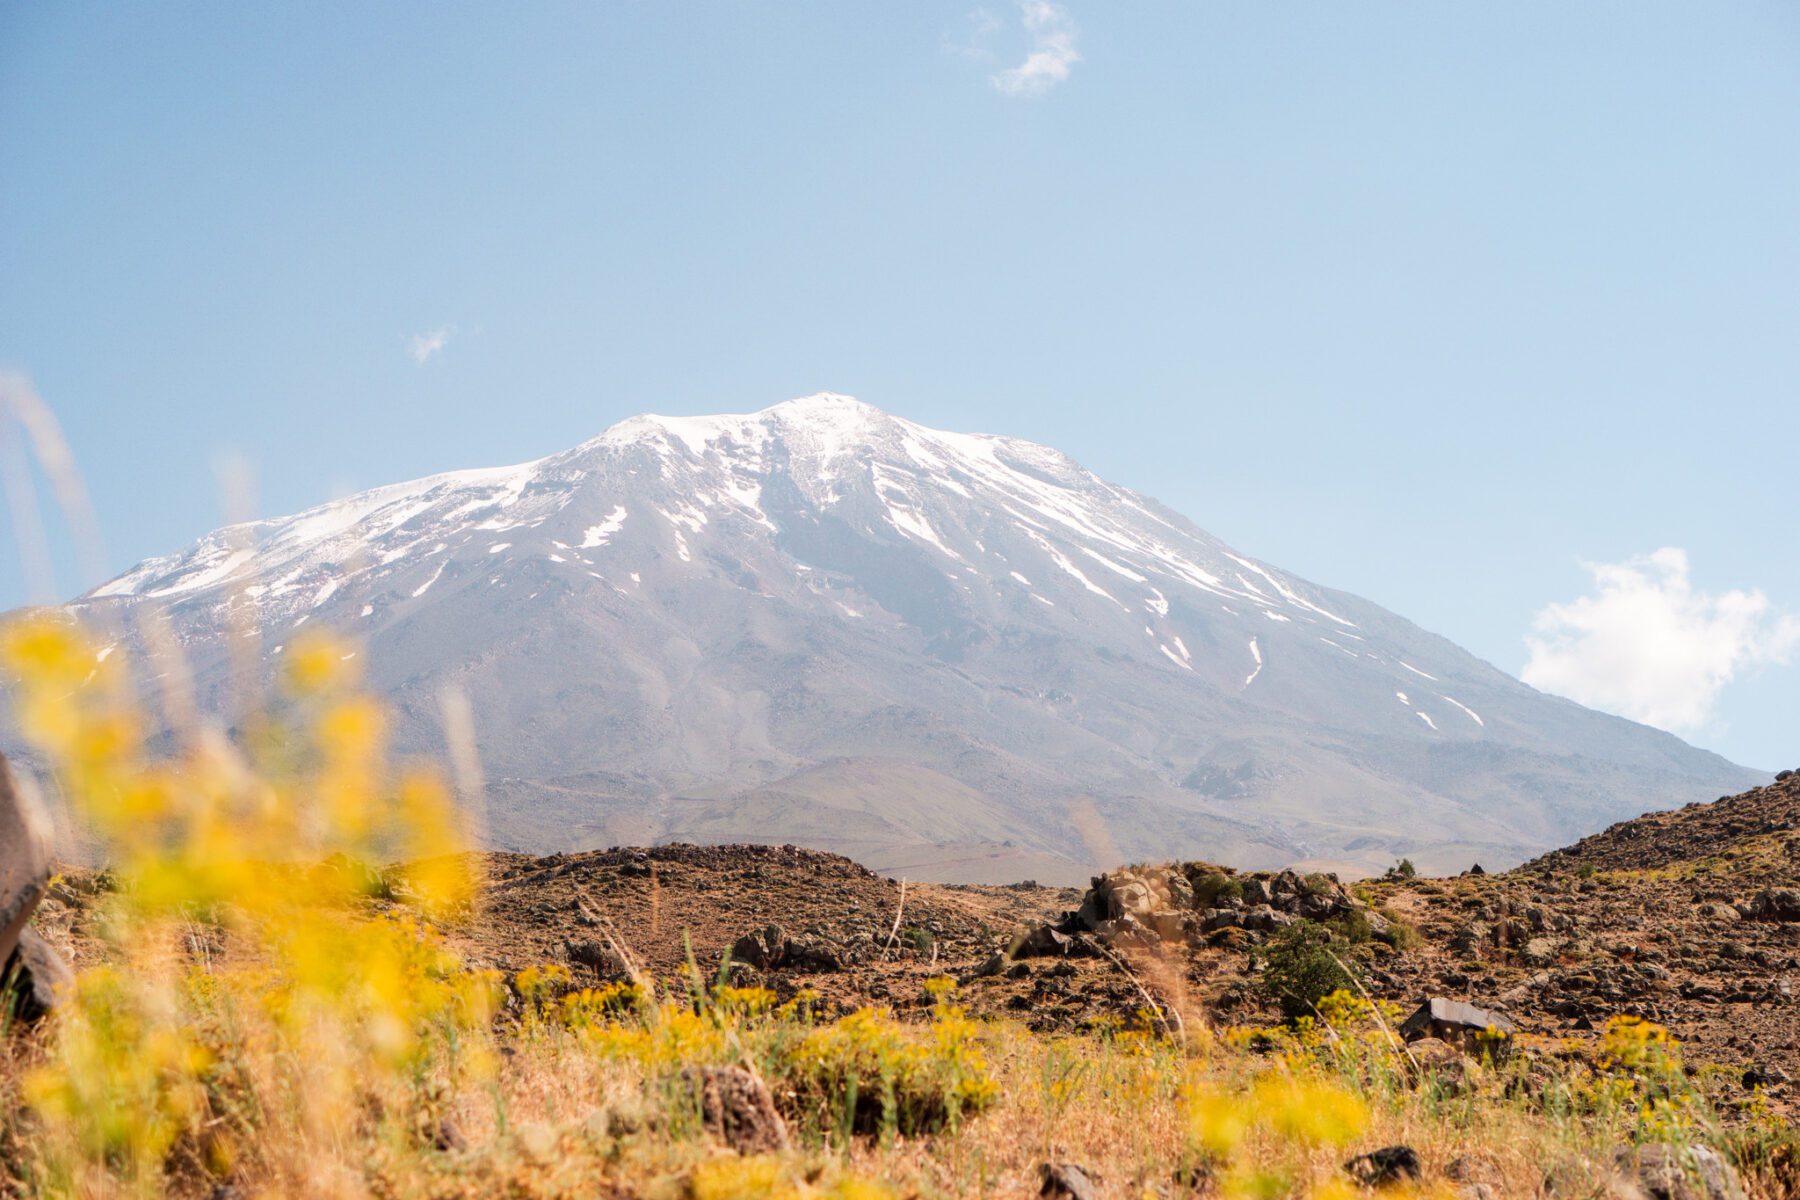 Mount Ararat / Agri Dagi